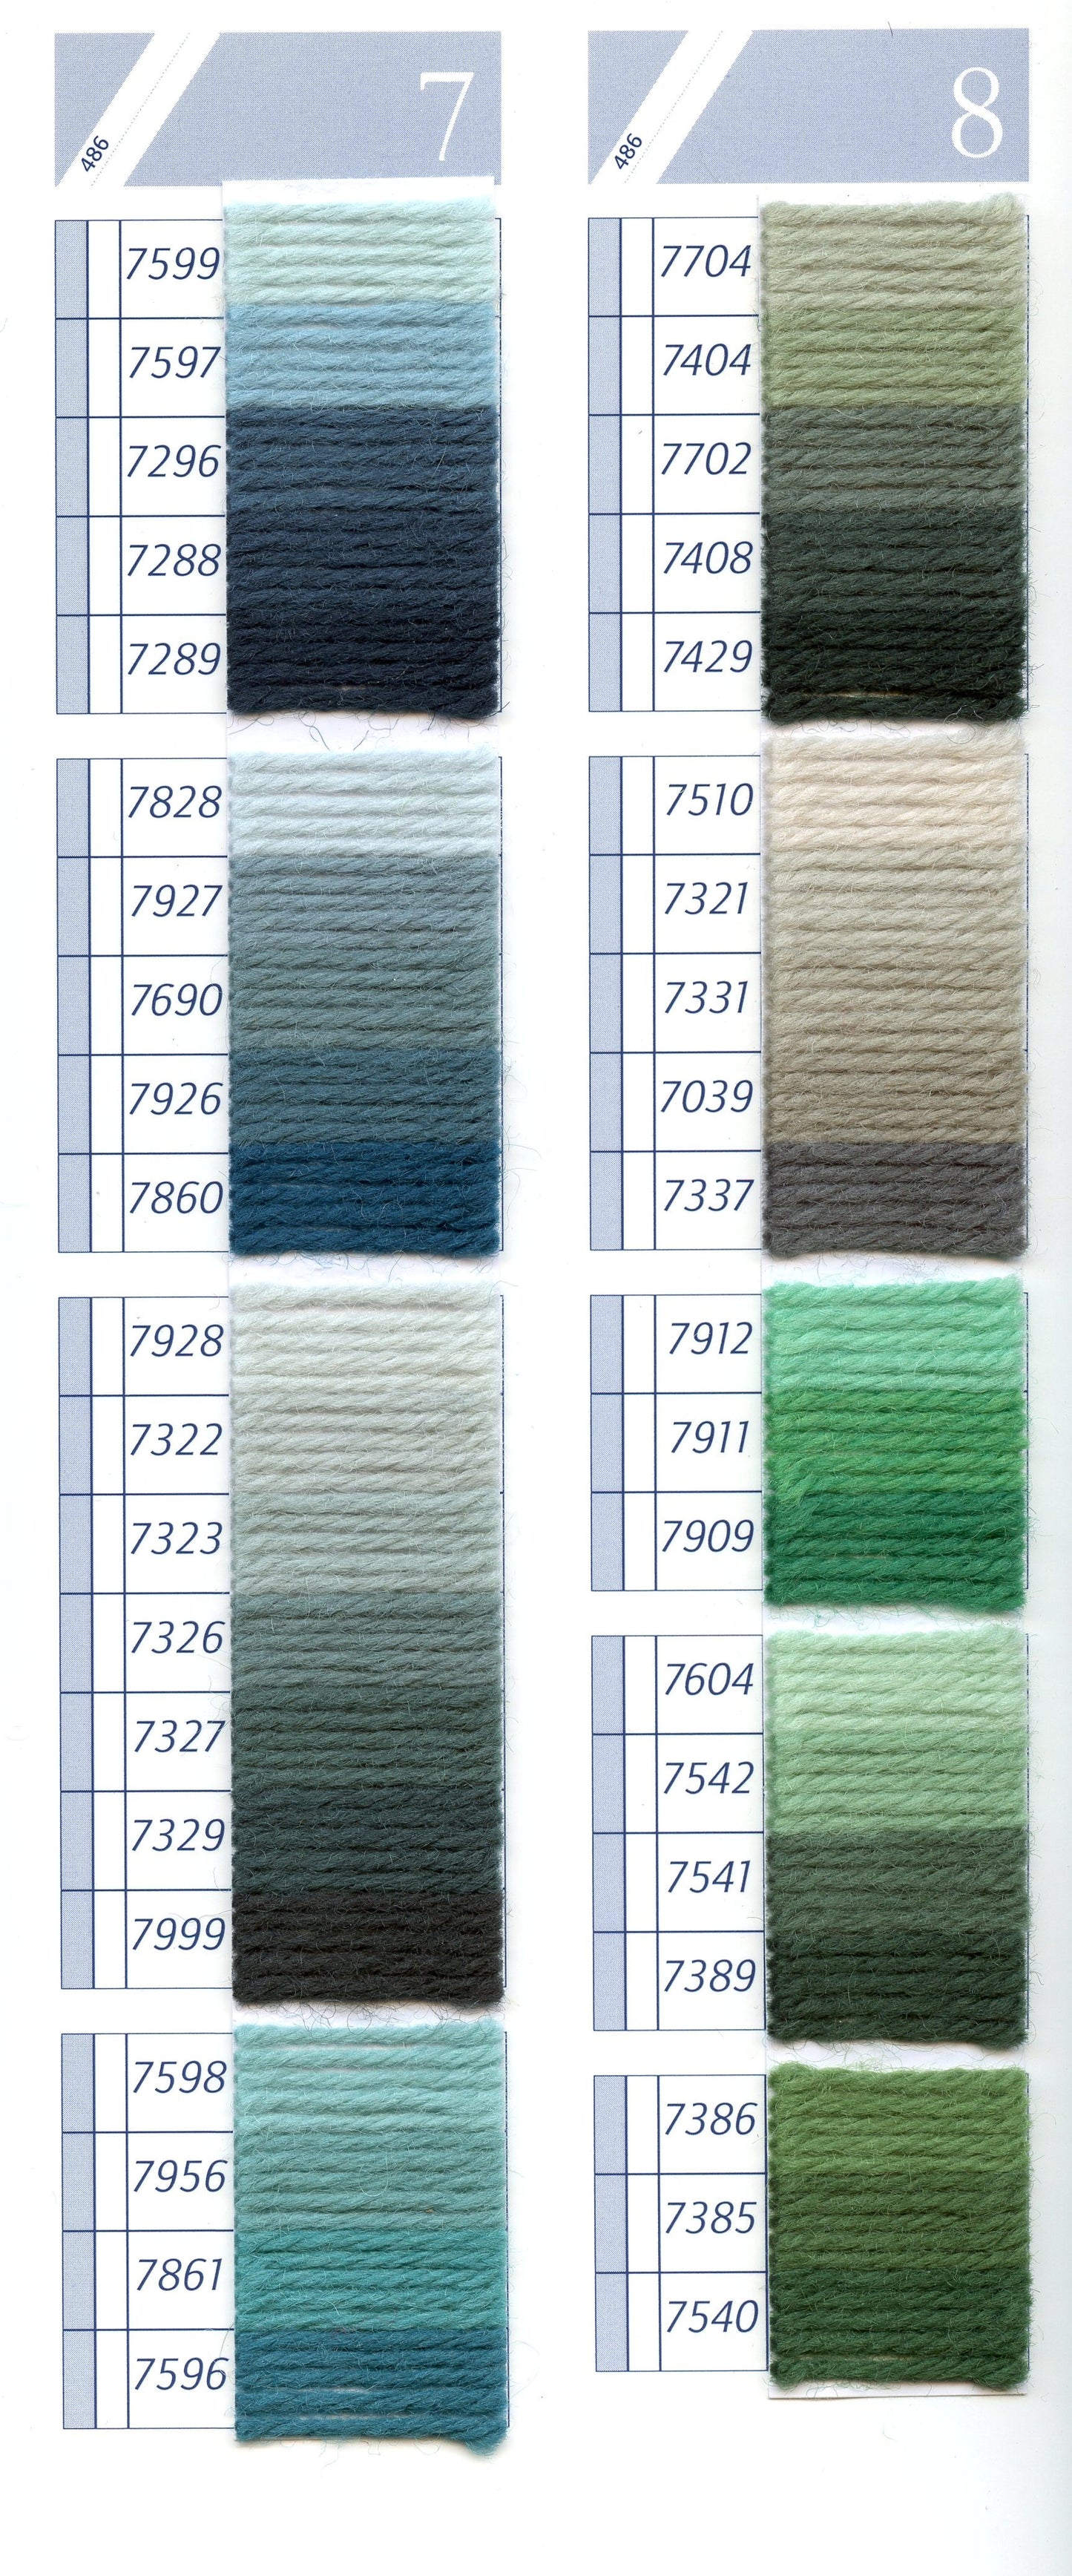 DMC Tapestry Wool Chart - Columns 7 & 8